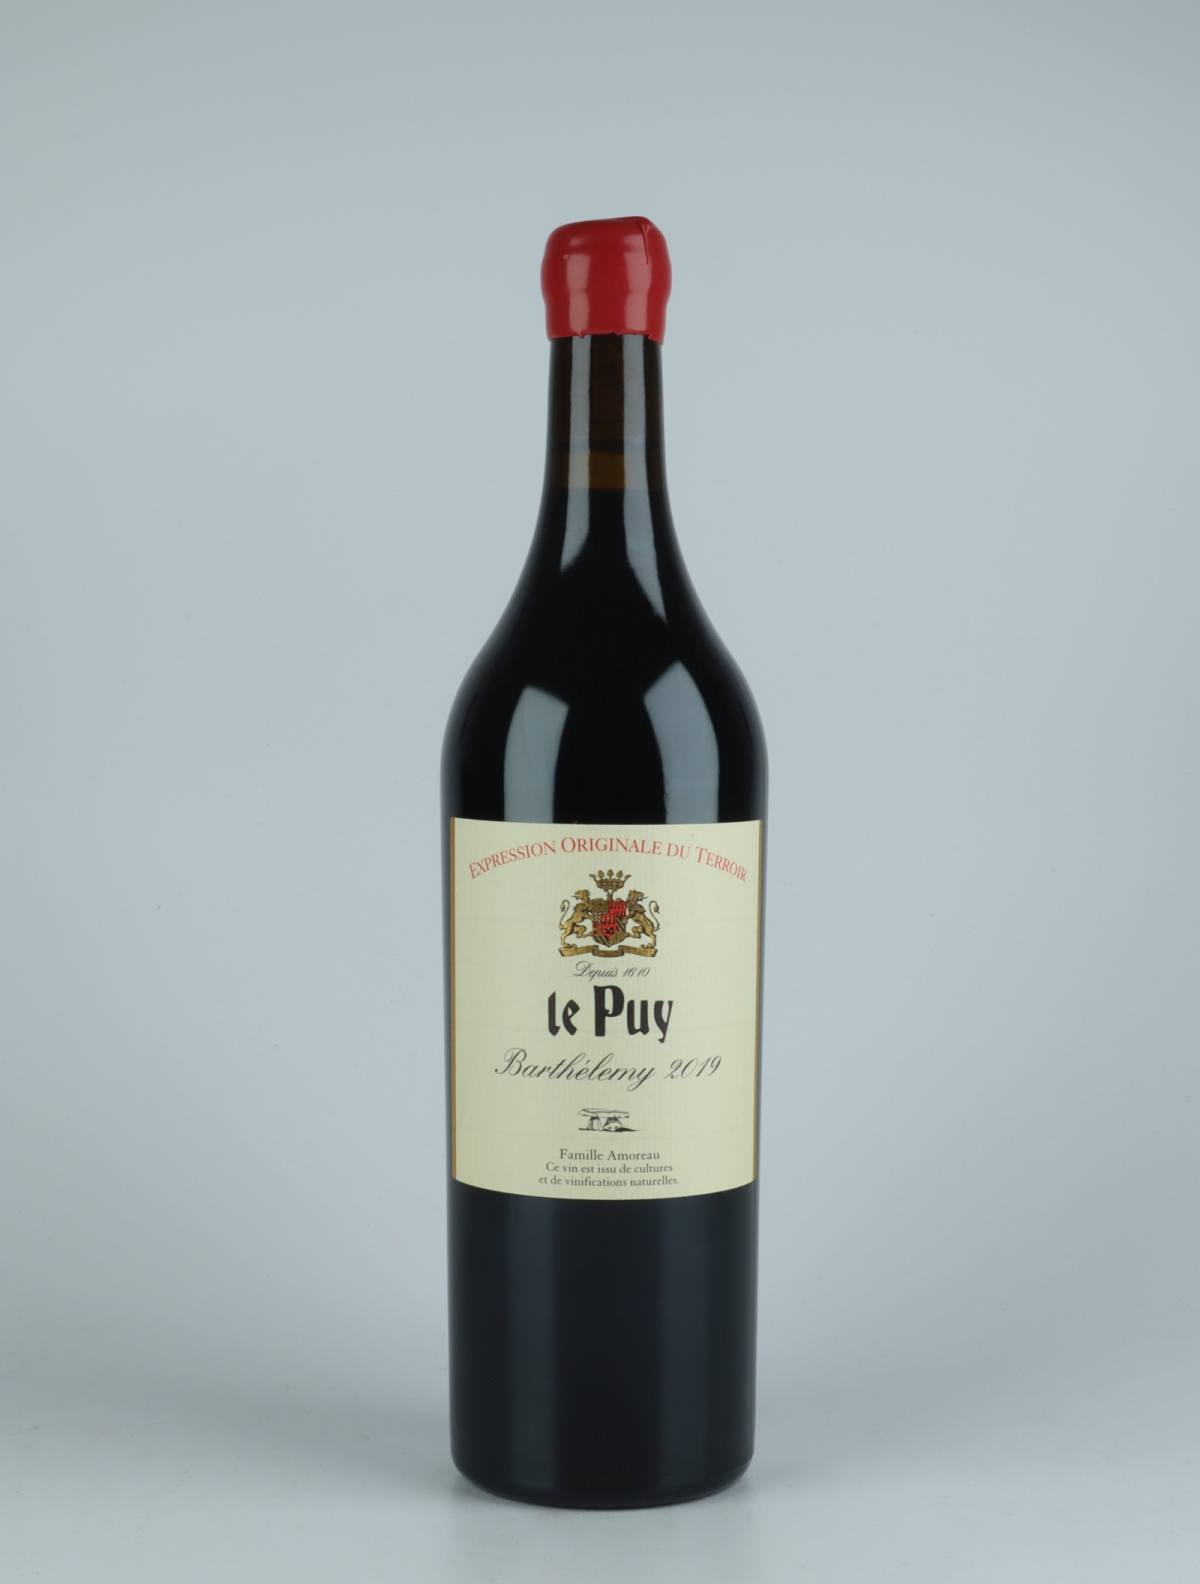 En flaske 2019 Barthélemy Rødvin fra Château le Puy, Bordeaux i Frankrig